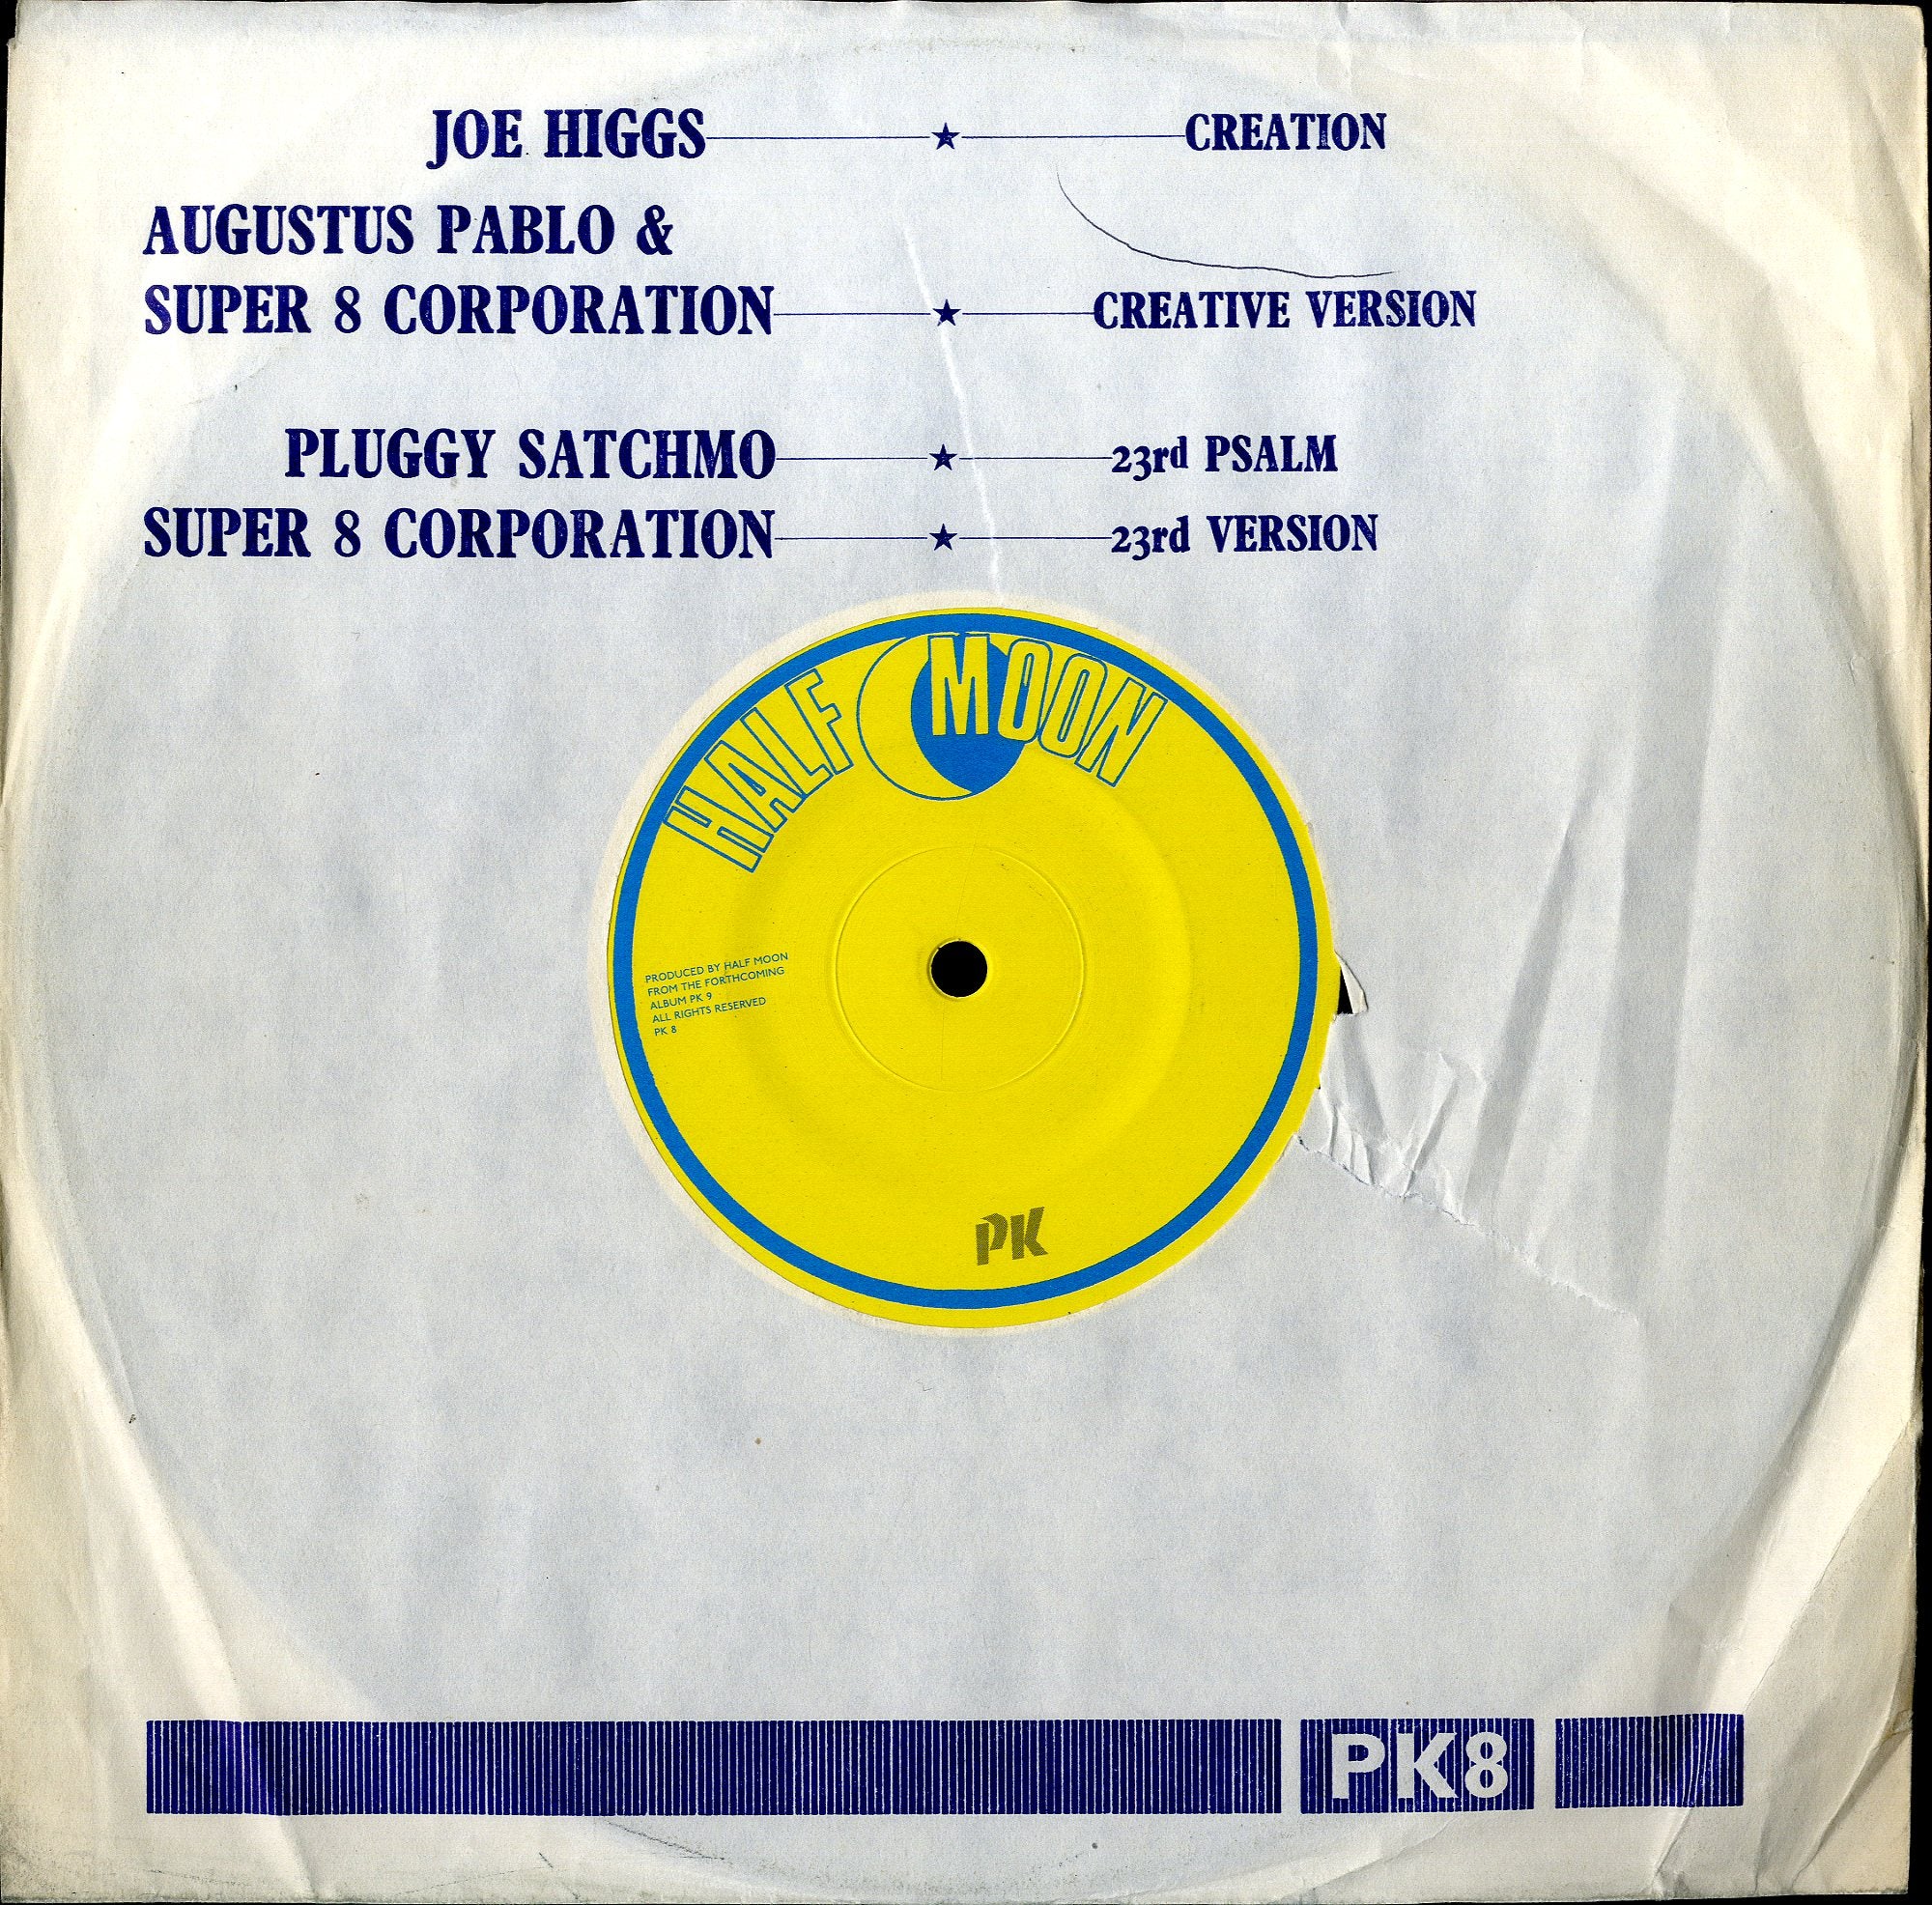 JOE HIGGS / AUGUSTUS PABLO & SUPER 8 CORPORATION / PLUGGY SATCHMO / SUPER 8 CORPORATION [Creation / Creation Version / 23rd Pslam / 23rd Version]